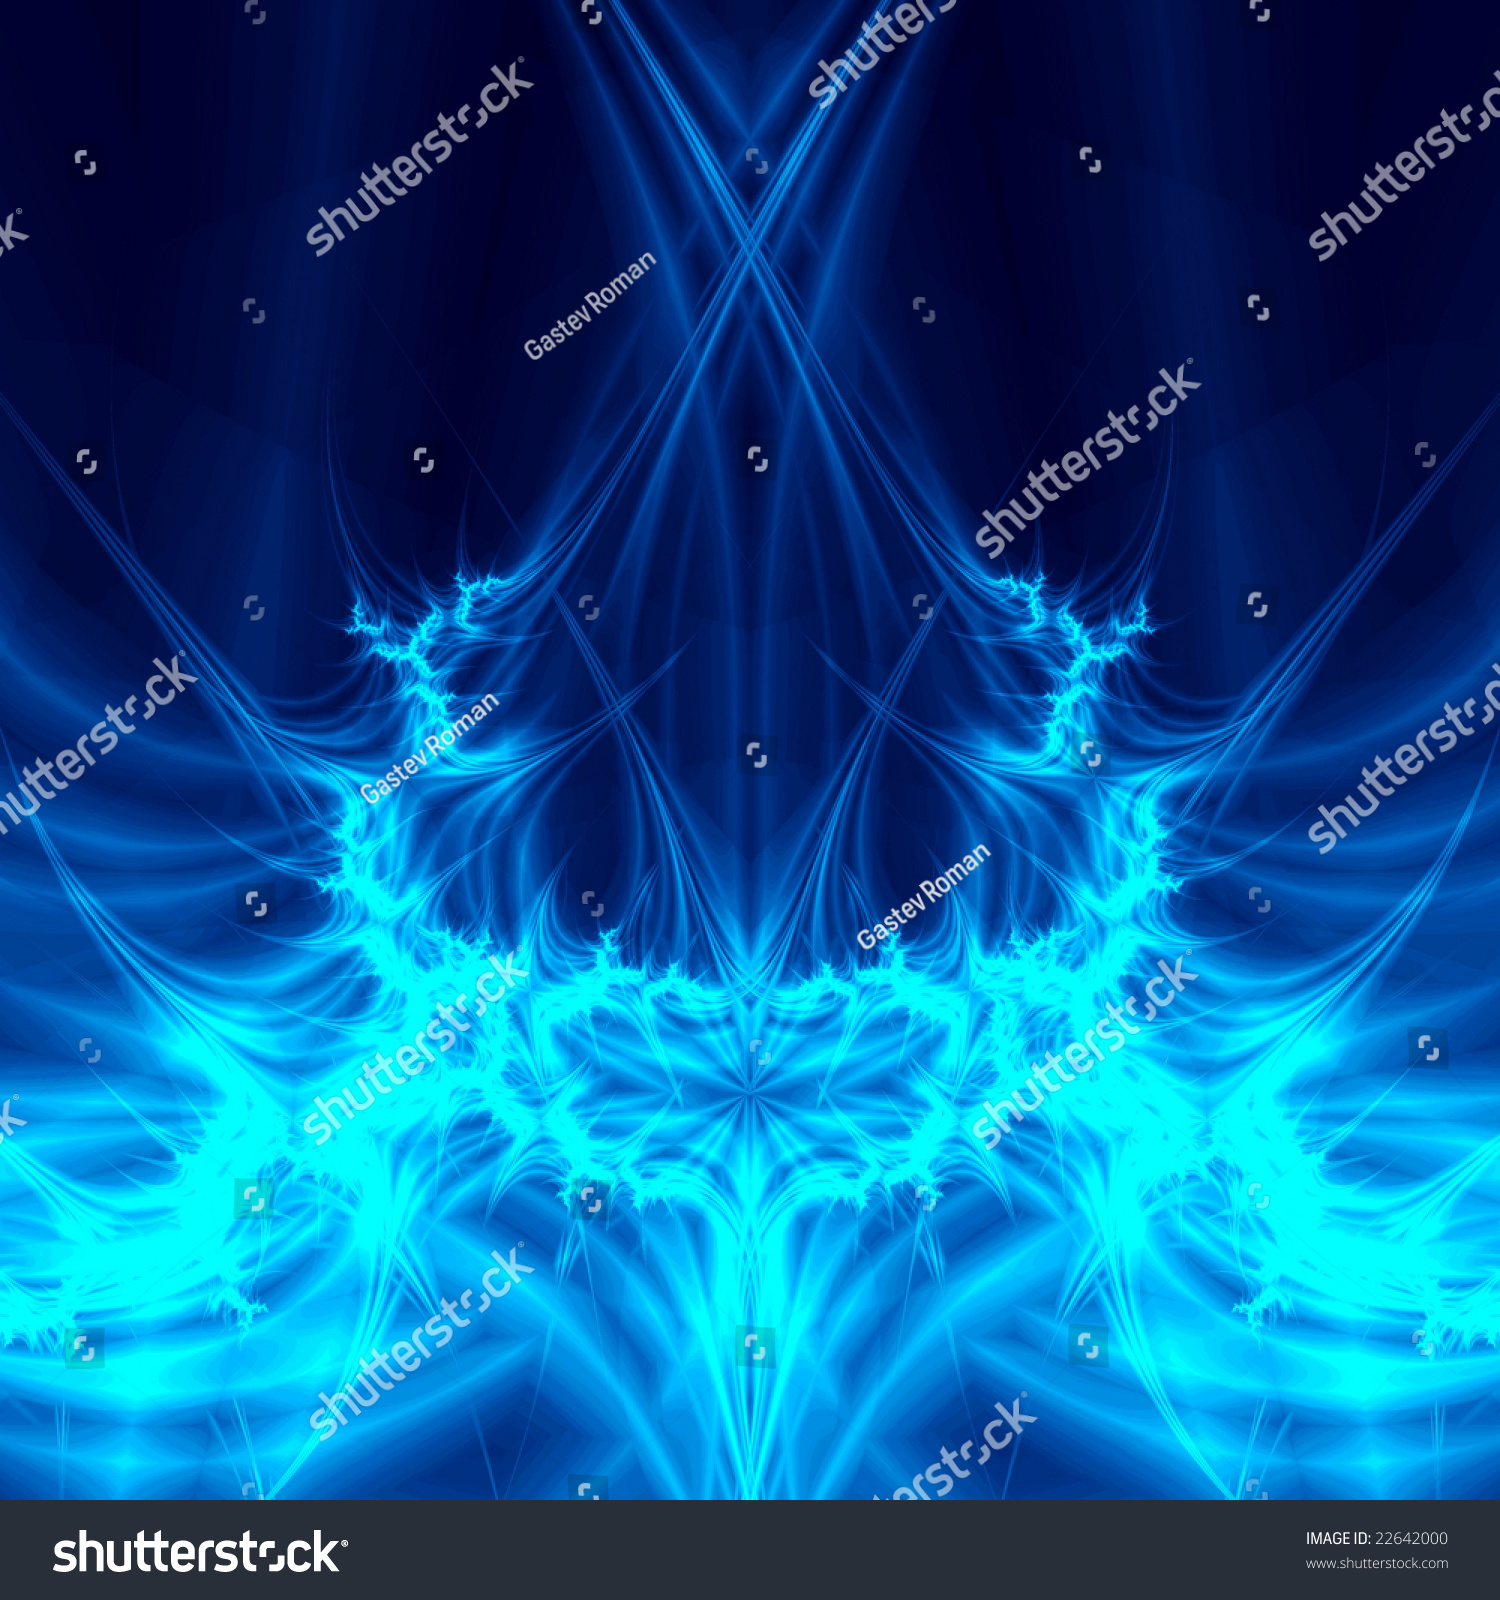 Blue Ice Design Background Stock Illustration 22642000 - Shutterstock